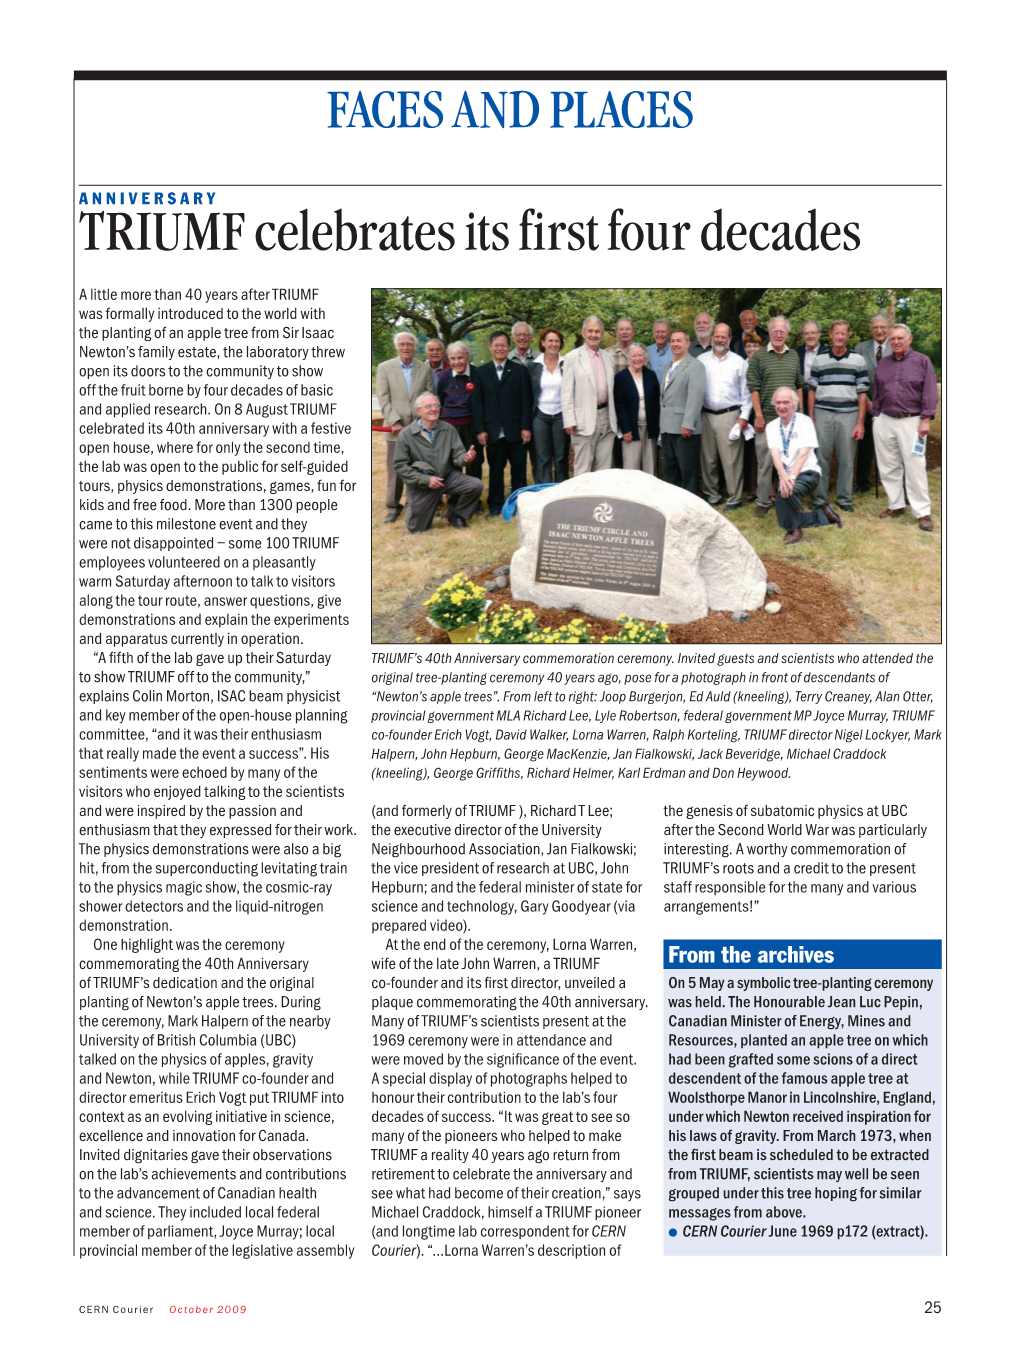 TRIUMF Celebrates Its First Four Decades